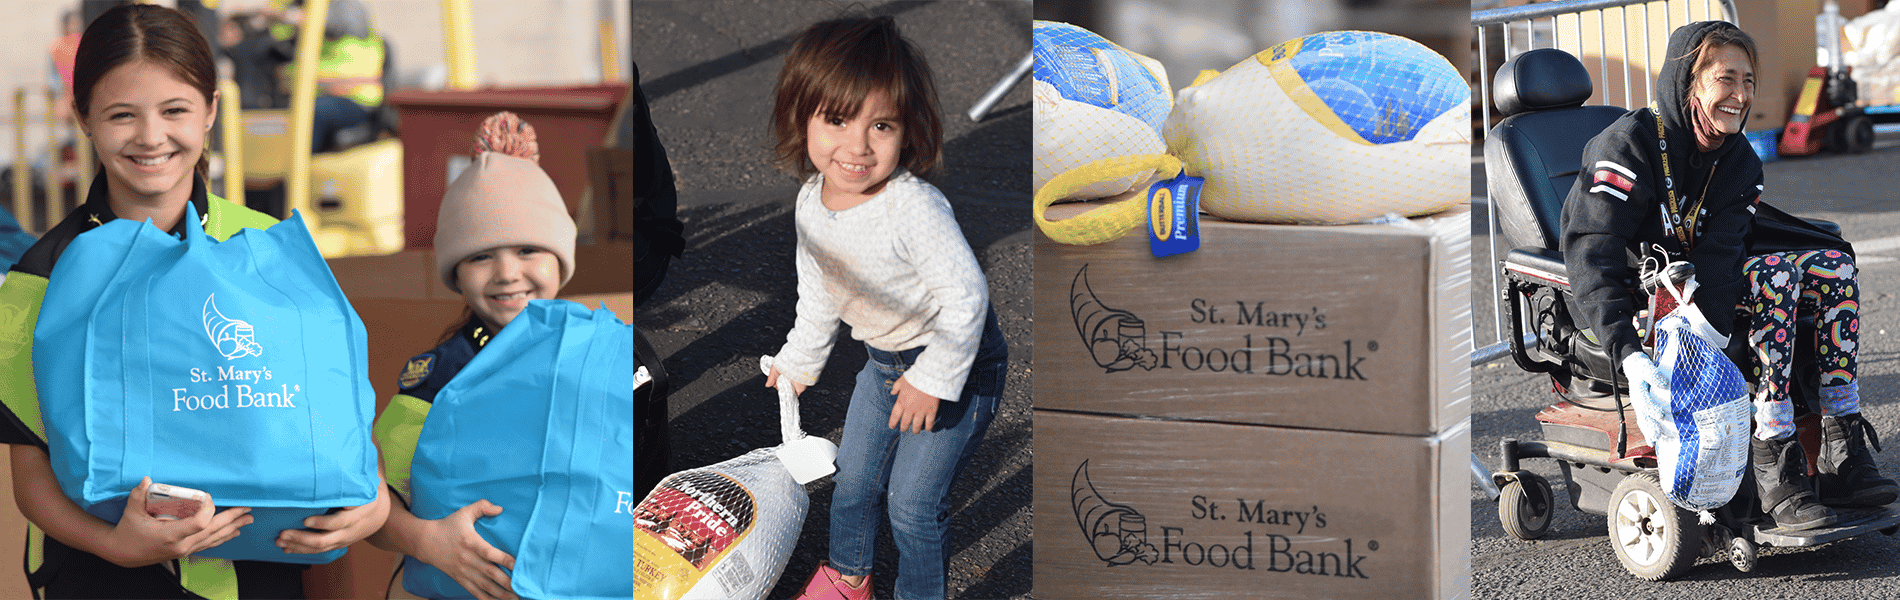 St Mary's Food Bank Turkey Distribution Helping Arizona Neighbors in Need